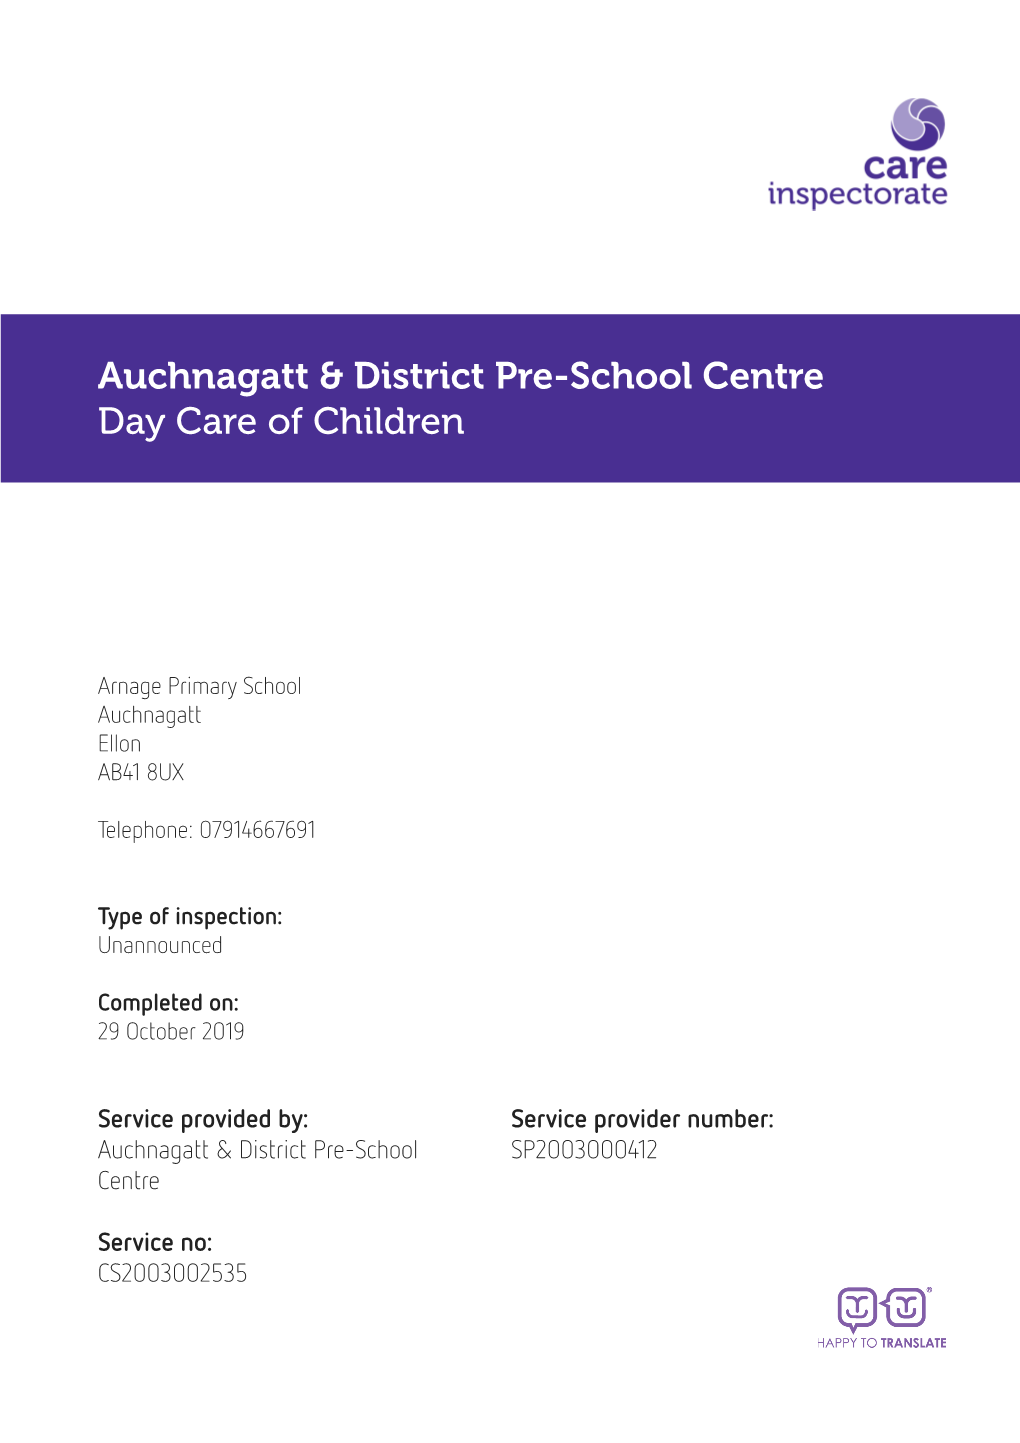 Auchnagatt & District Pre-School Centre Day Care of Children